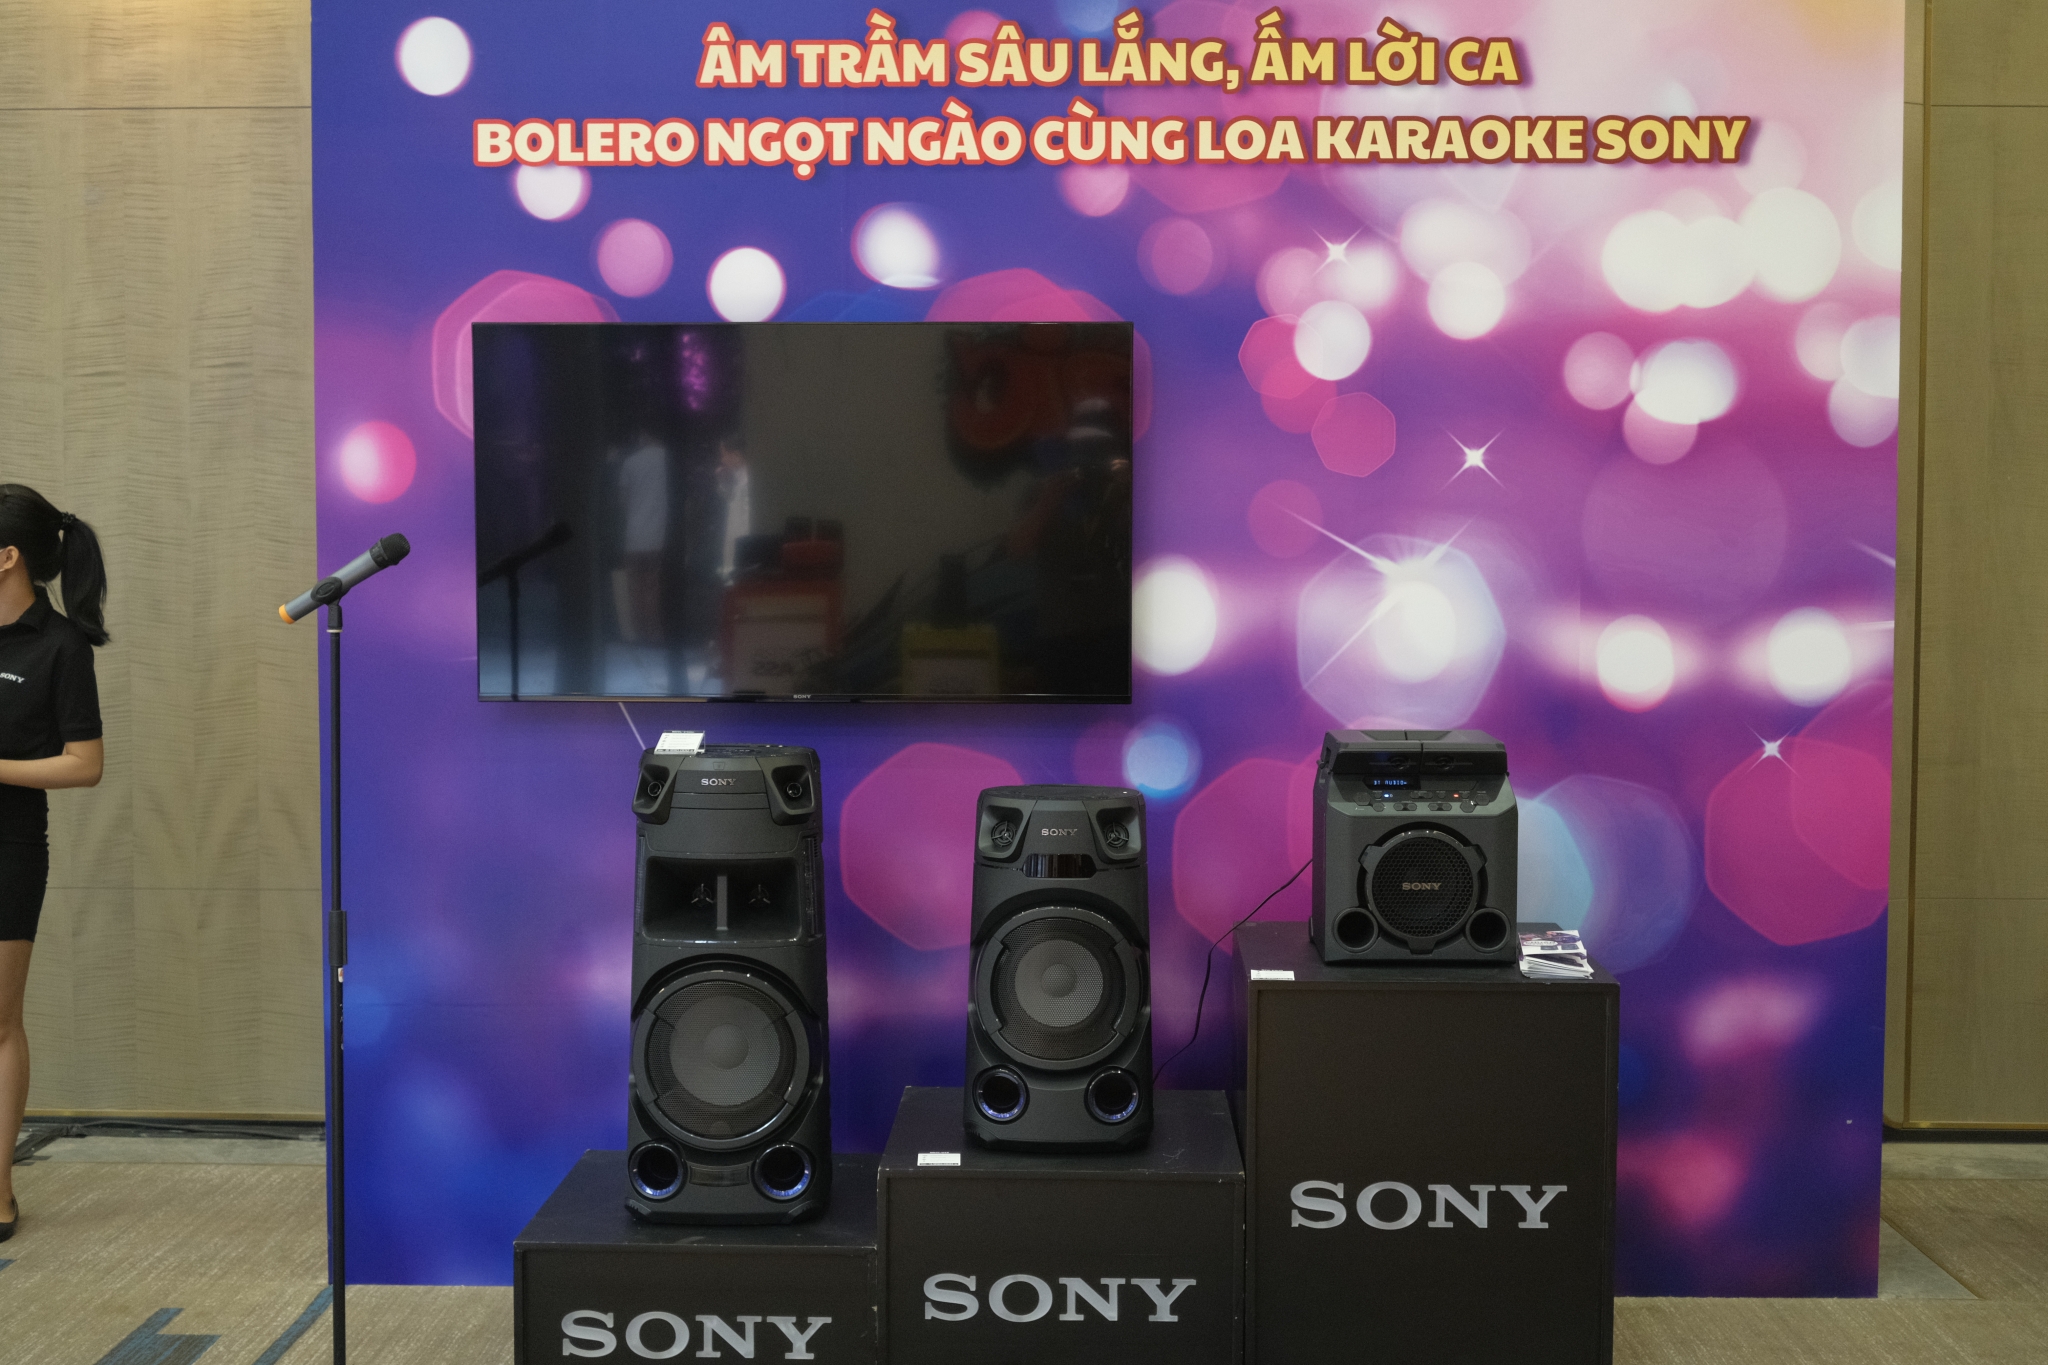 tinhte_sony_loa_karaoke.JPG